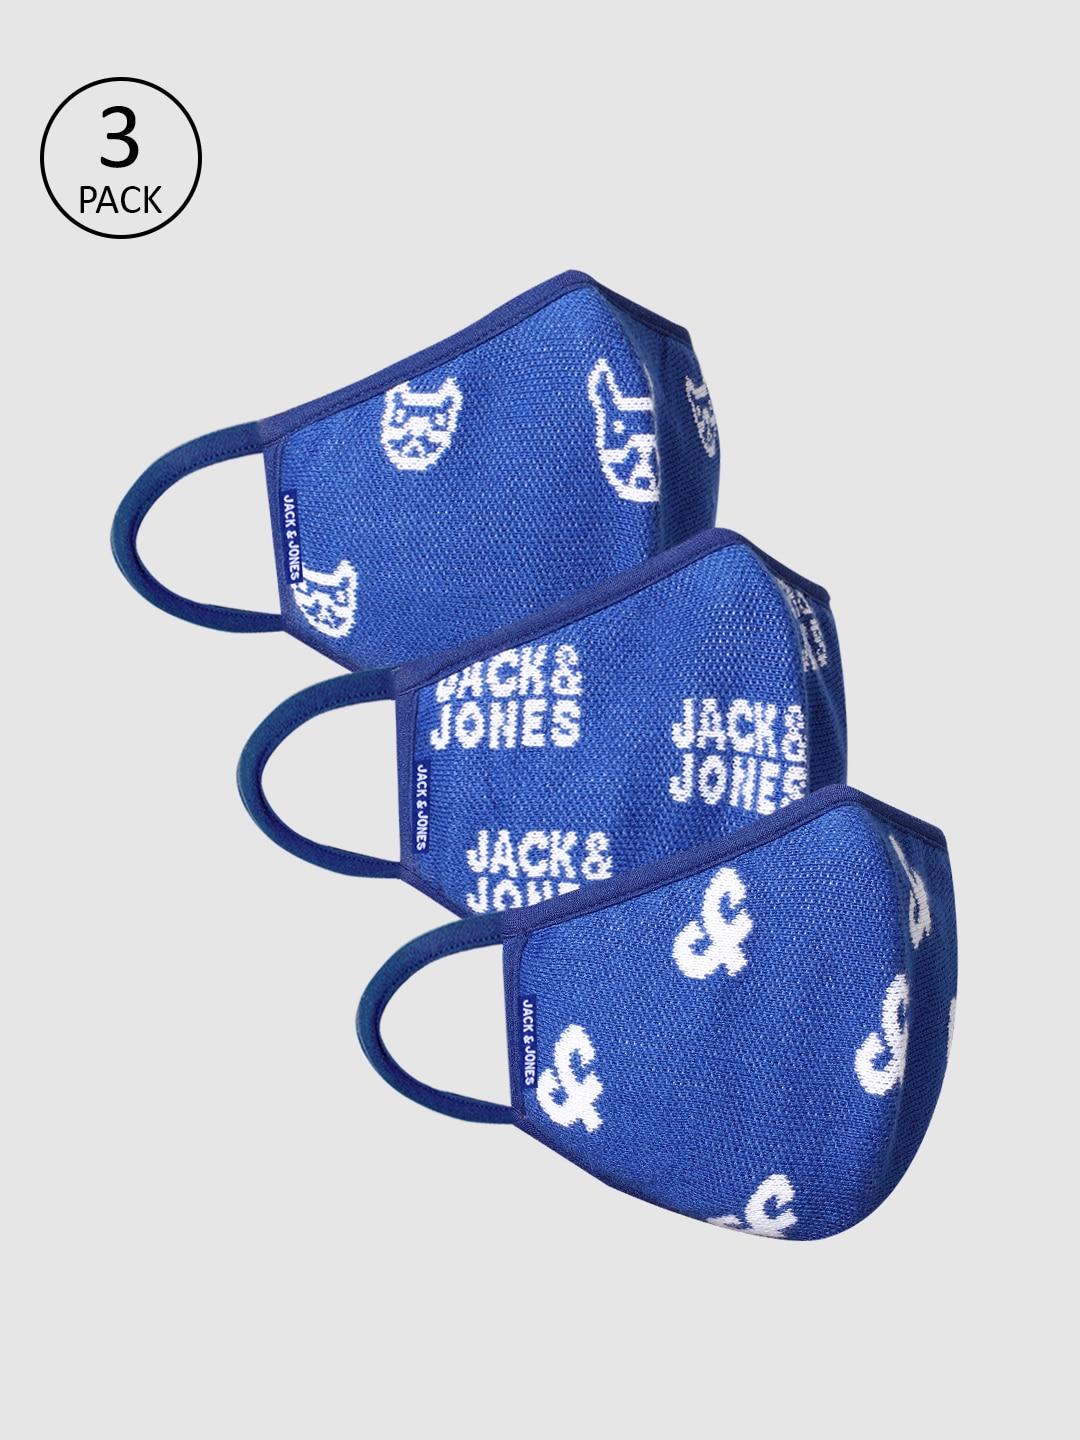 jack-&-jones-men-3-pcs-blue-printed-3-ply-protective-reusable-masks